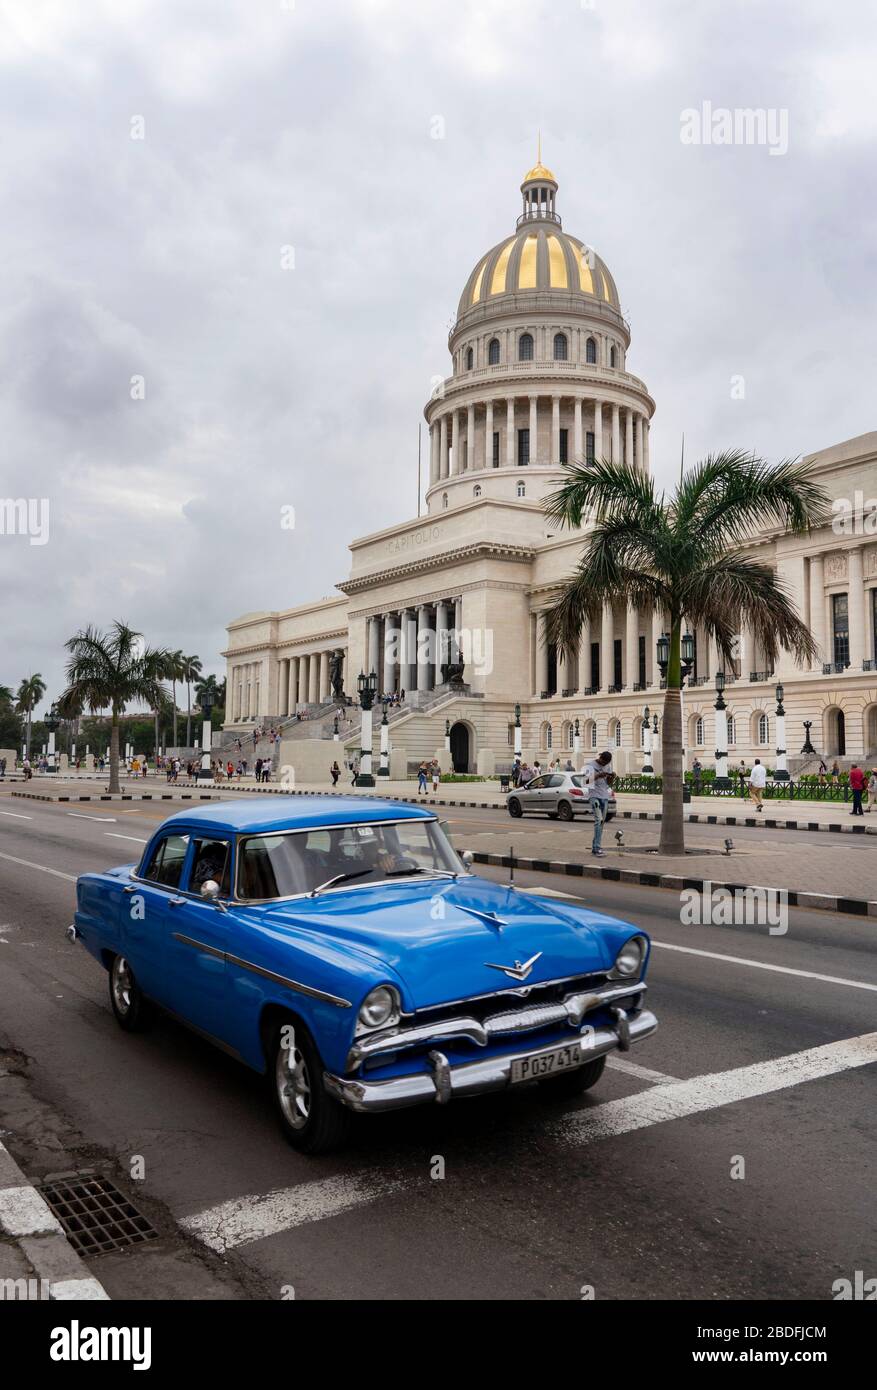 Capitolio Nacional de la Habana with American classic car Stock Photo